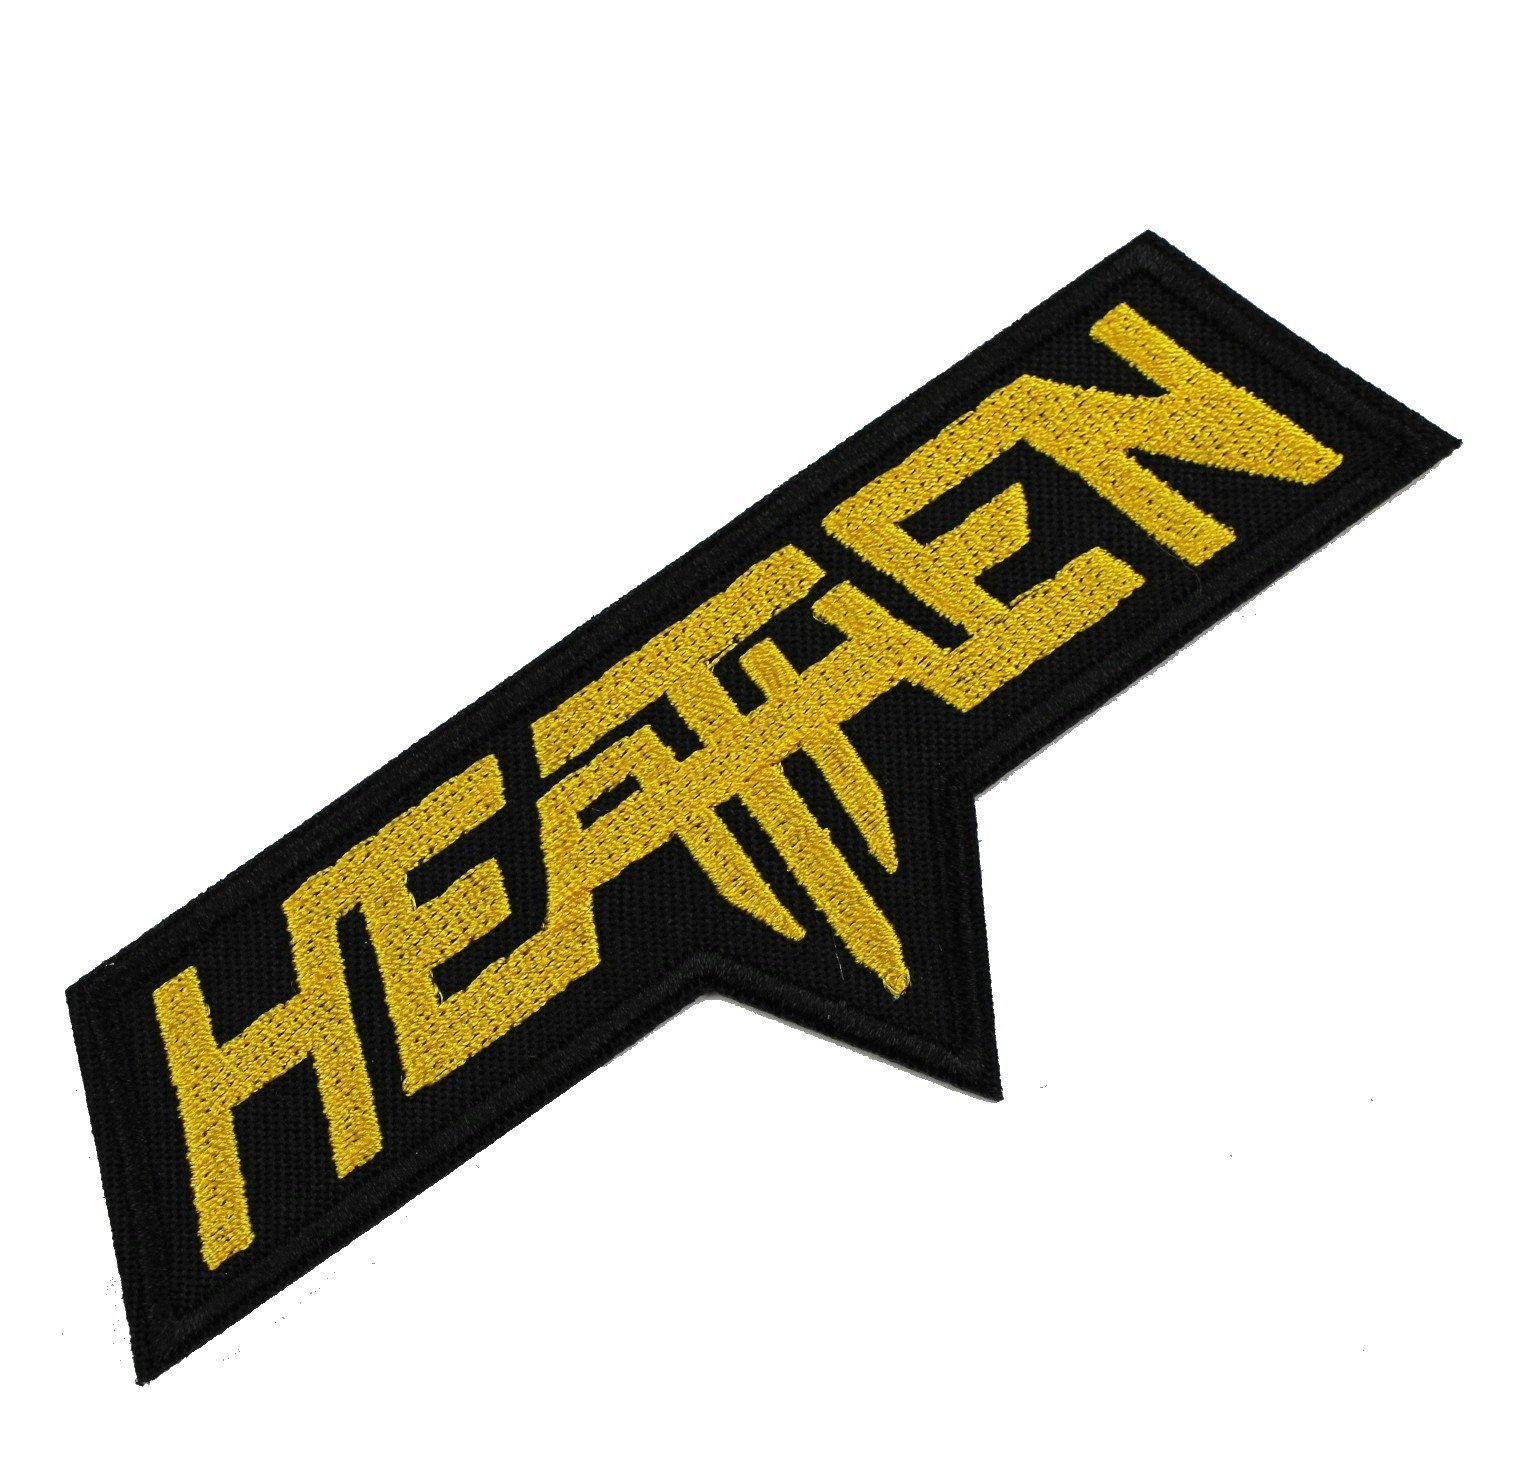 Heathen logo patch